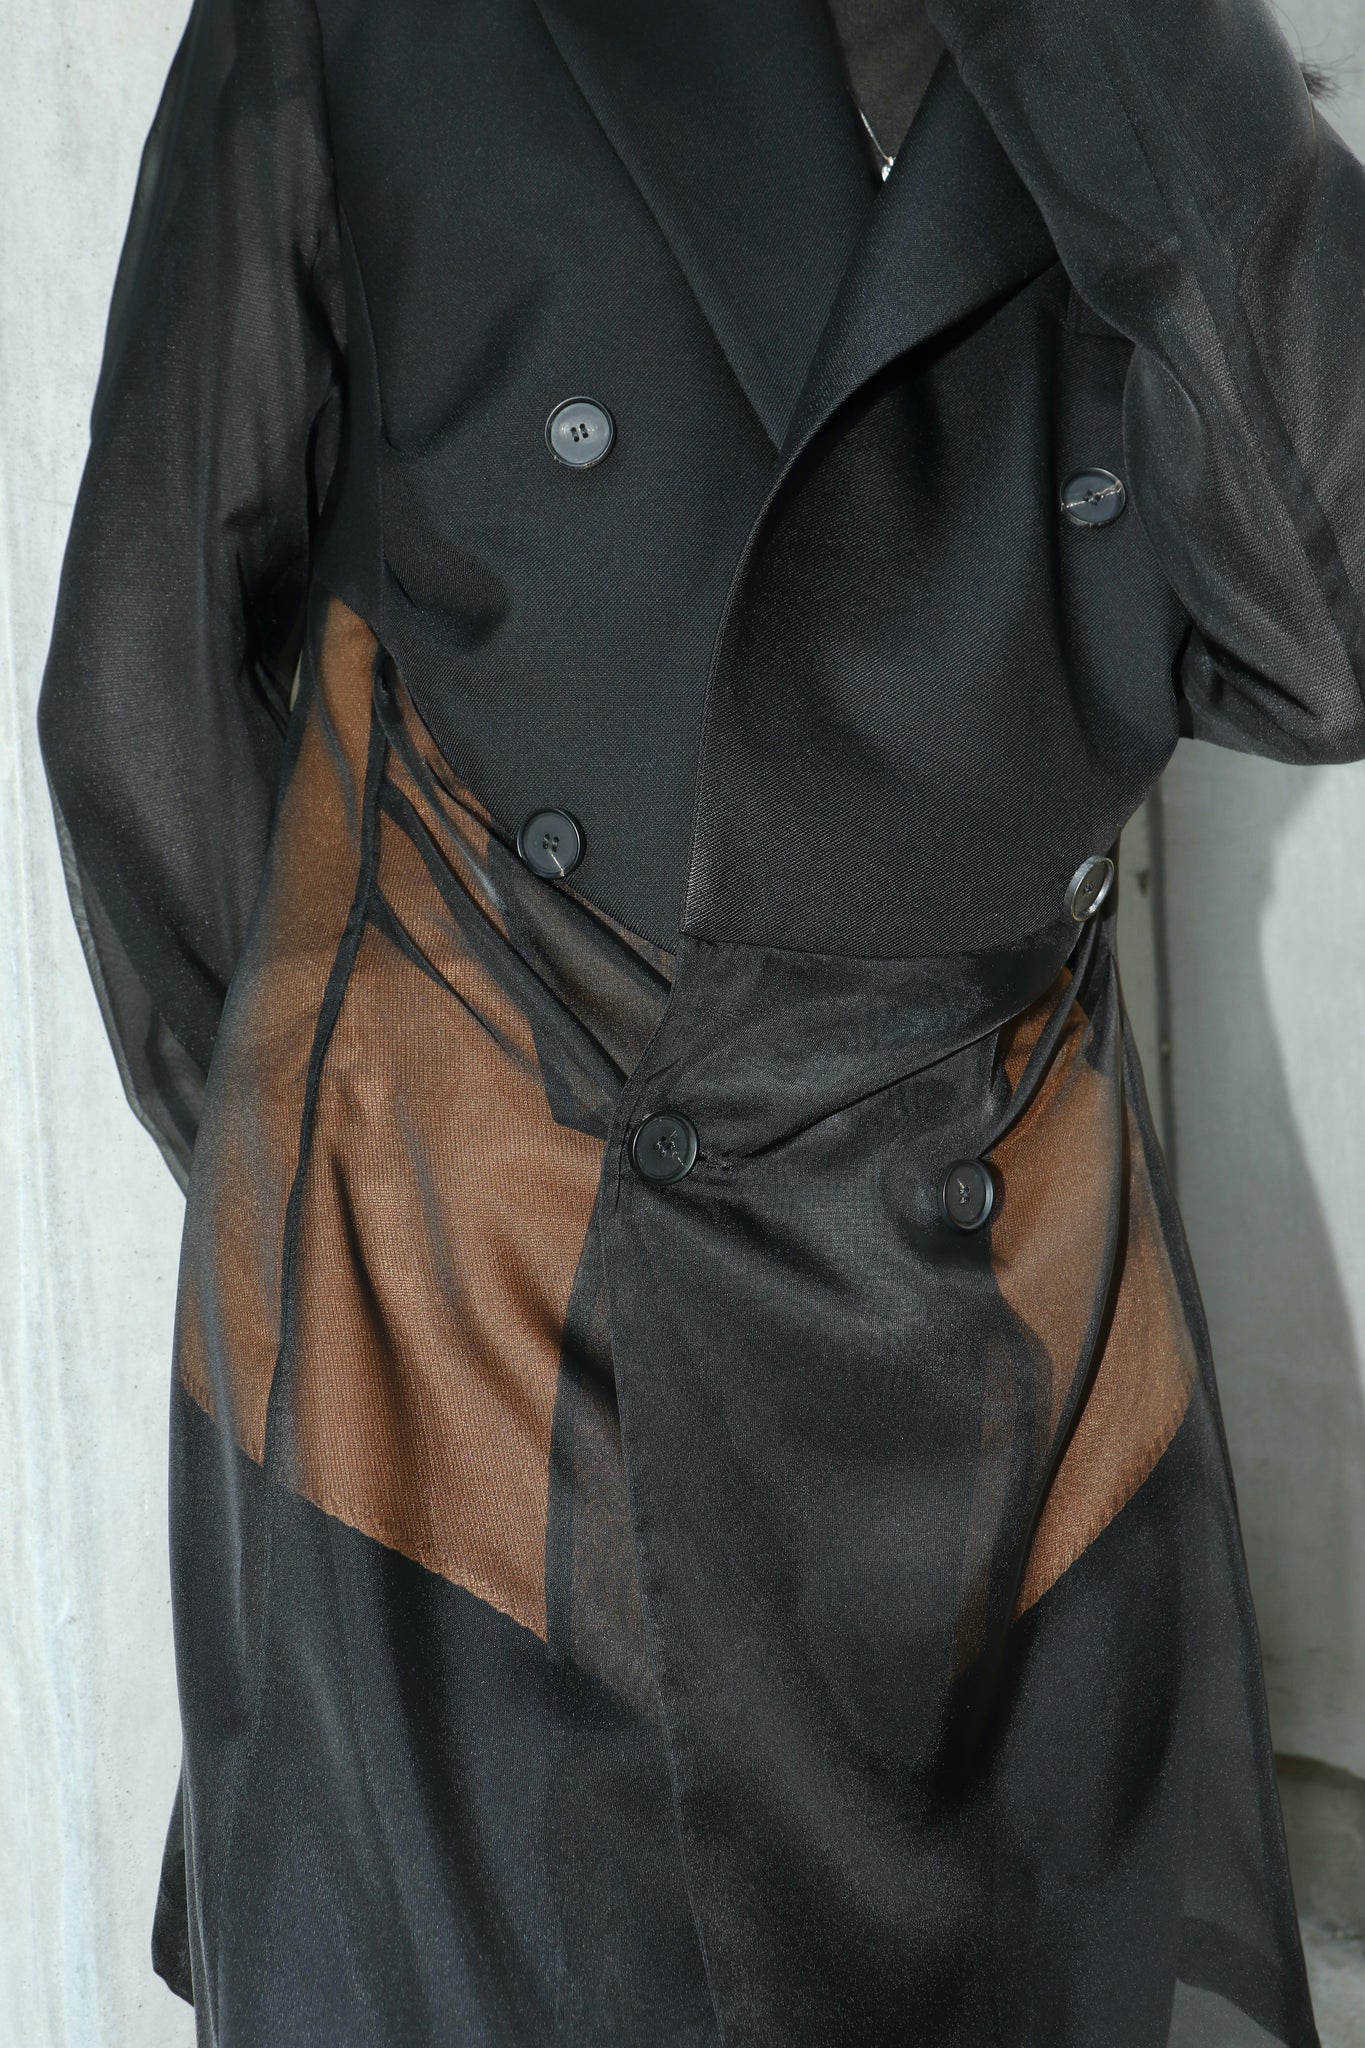 FETICO 22SS Combined Organza Tailored Jacketを使用したスタイリング画像